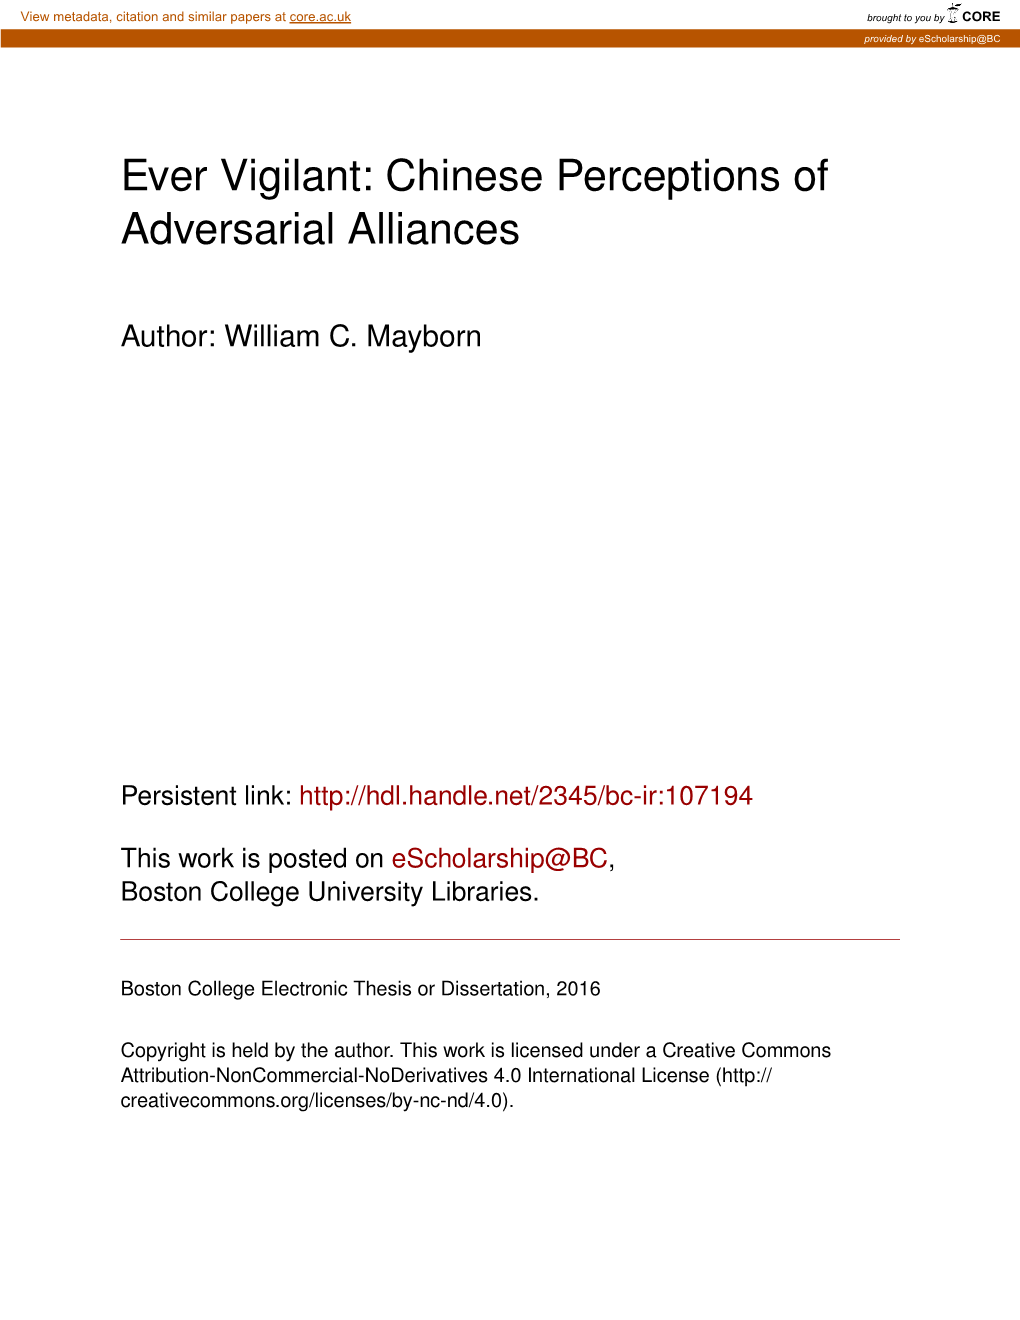 Ever Vigilant: Chinese Perceptions of Adversarial Alliances